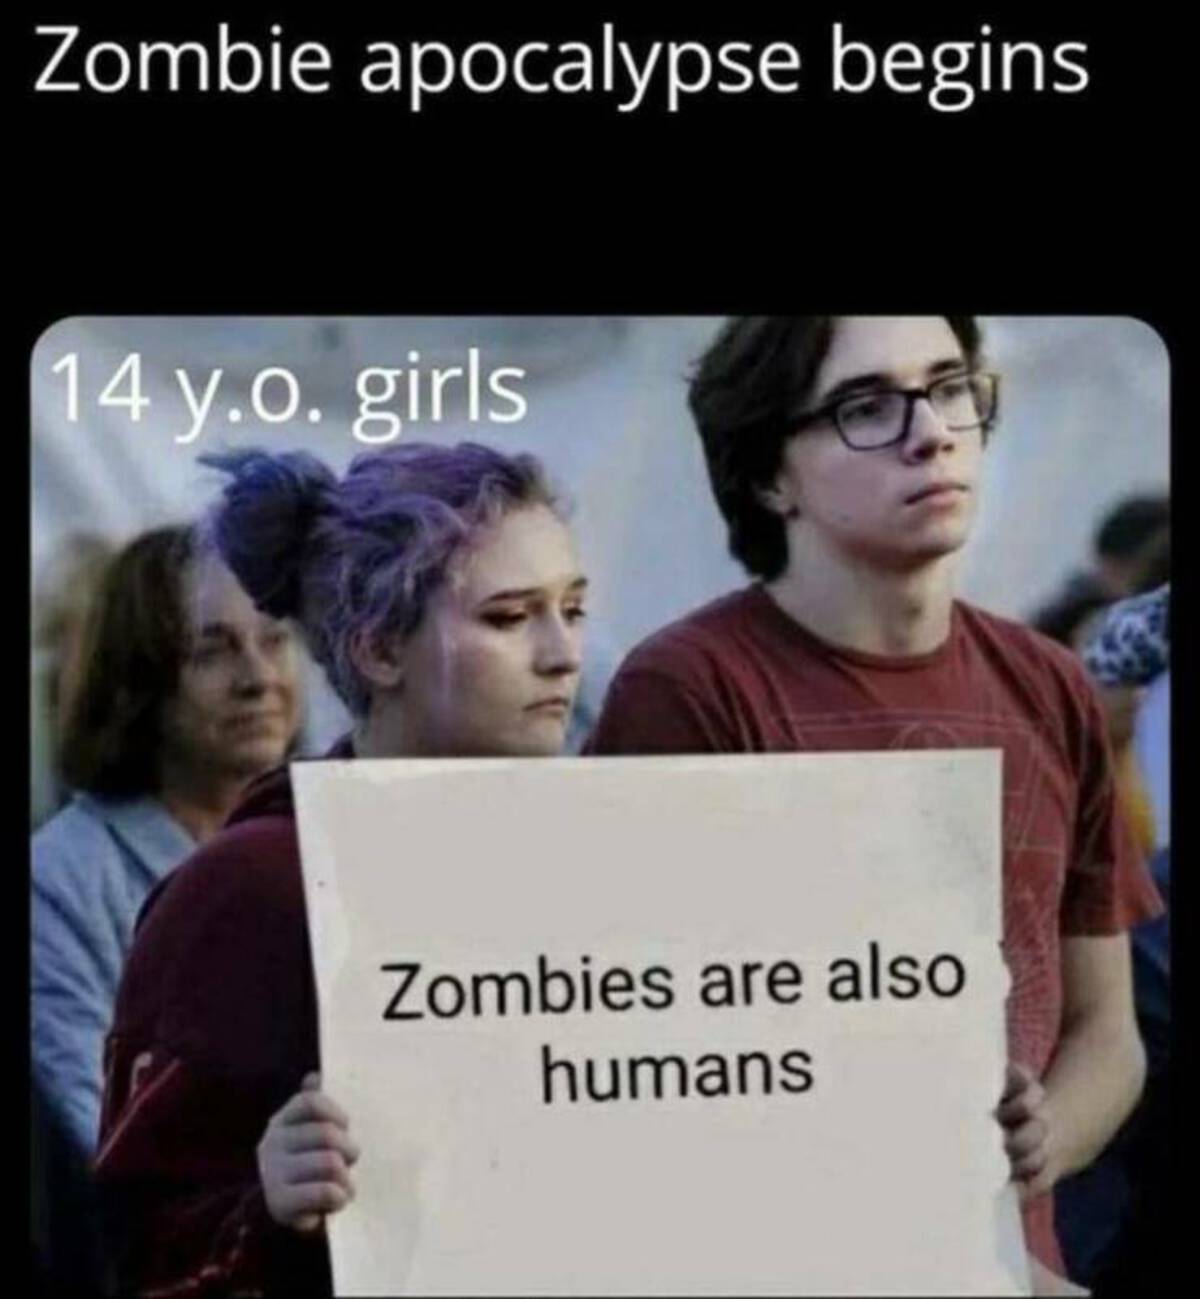 zombie apocalypse begins meme - Zombie apocalypse begins 14 y.o. girls Zombies are also humans